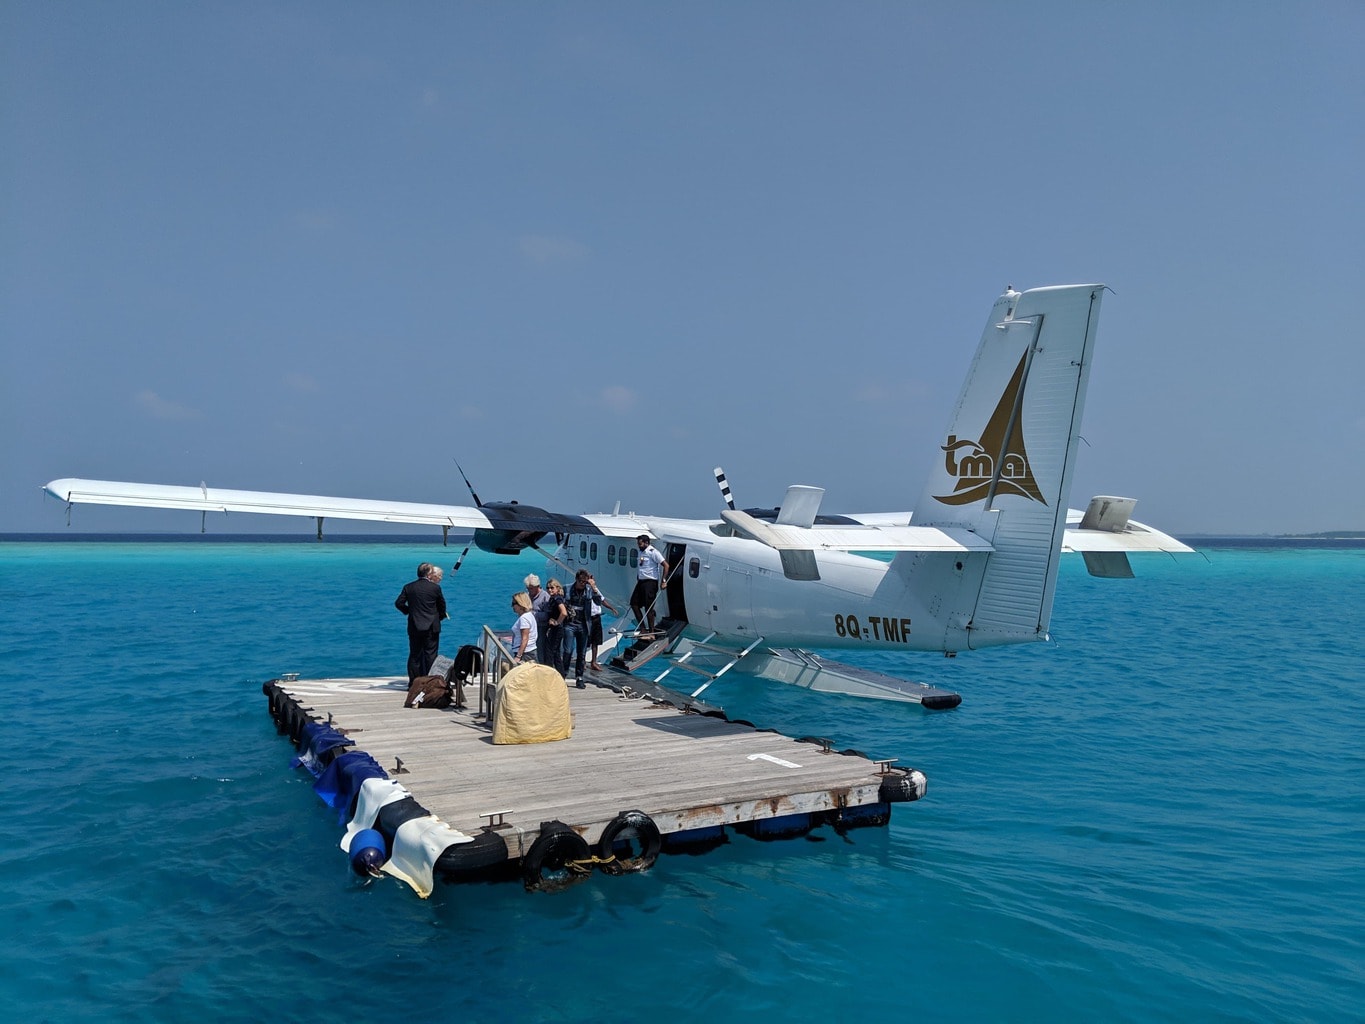 The floating “airport” of Soneva Fushi